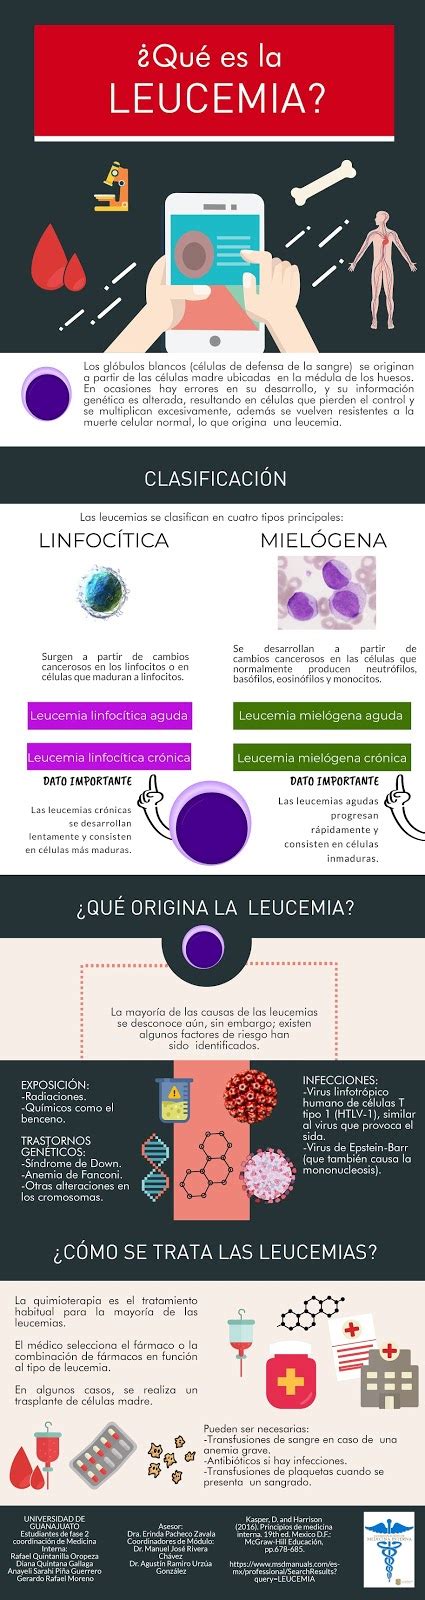 DivulgaciÓn CientÍfica Ug What Is Leukemia